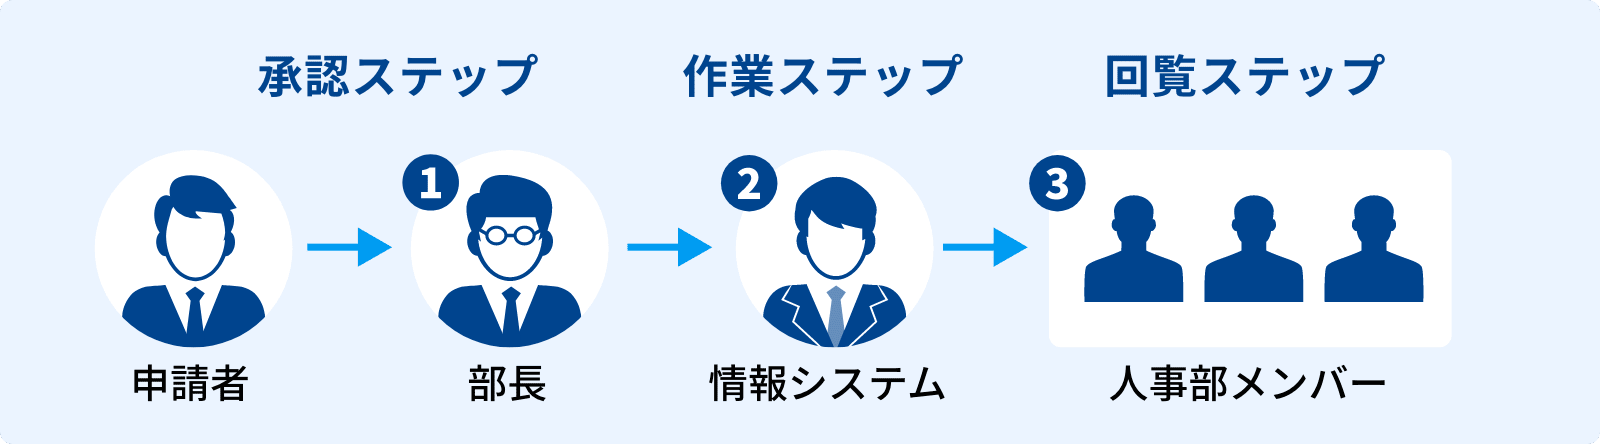 rakumo ワークフロー 承認 → 作業 → 回覧ステップのイメージ